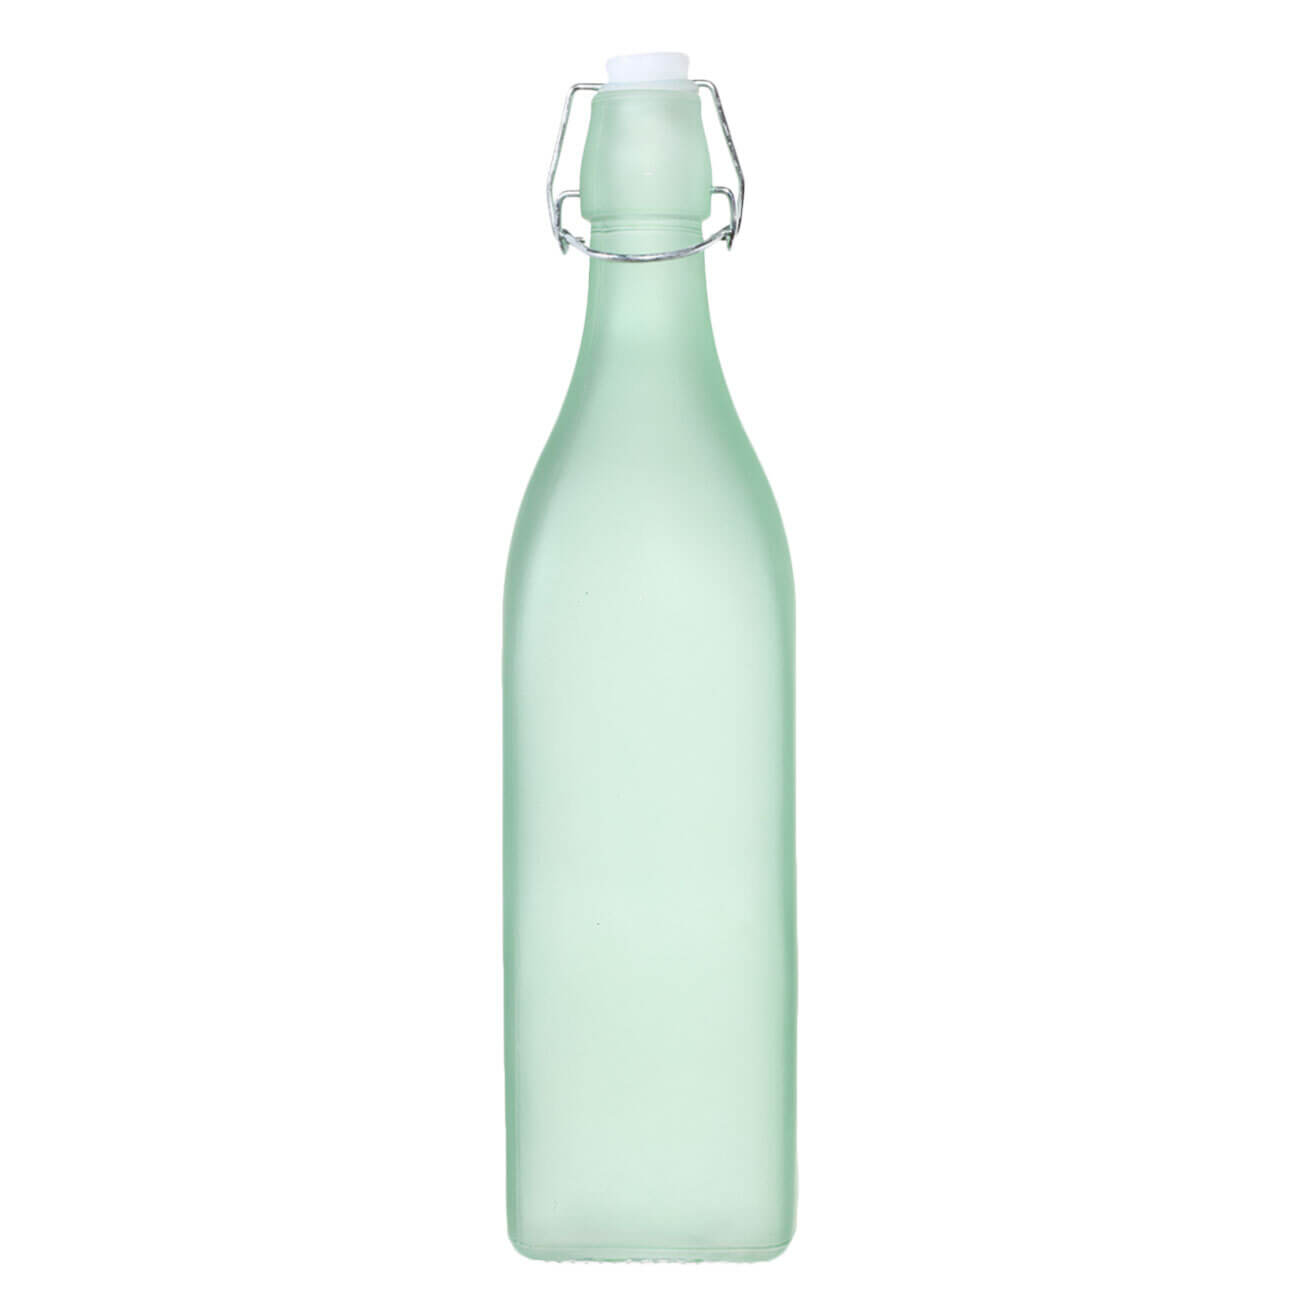 бутылка для масла уксуса mallony 500мл стеклянная с дозатором 103806 Бутылка для масла или уксуса, 1 л, с клипсой, стекло/металл, зеленая, Light kitchen